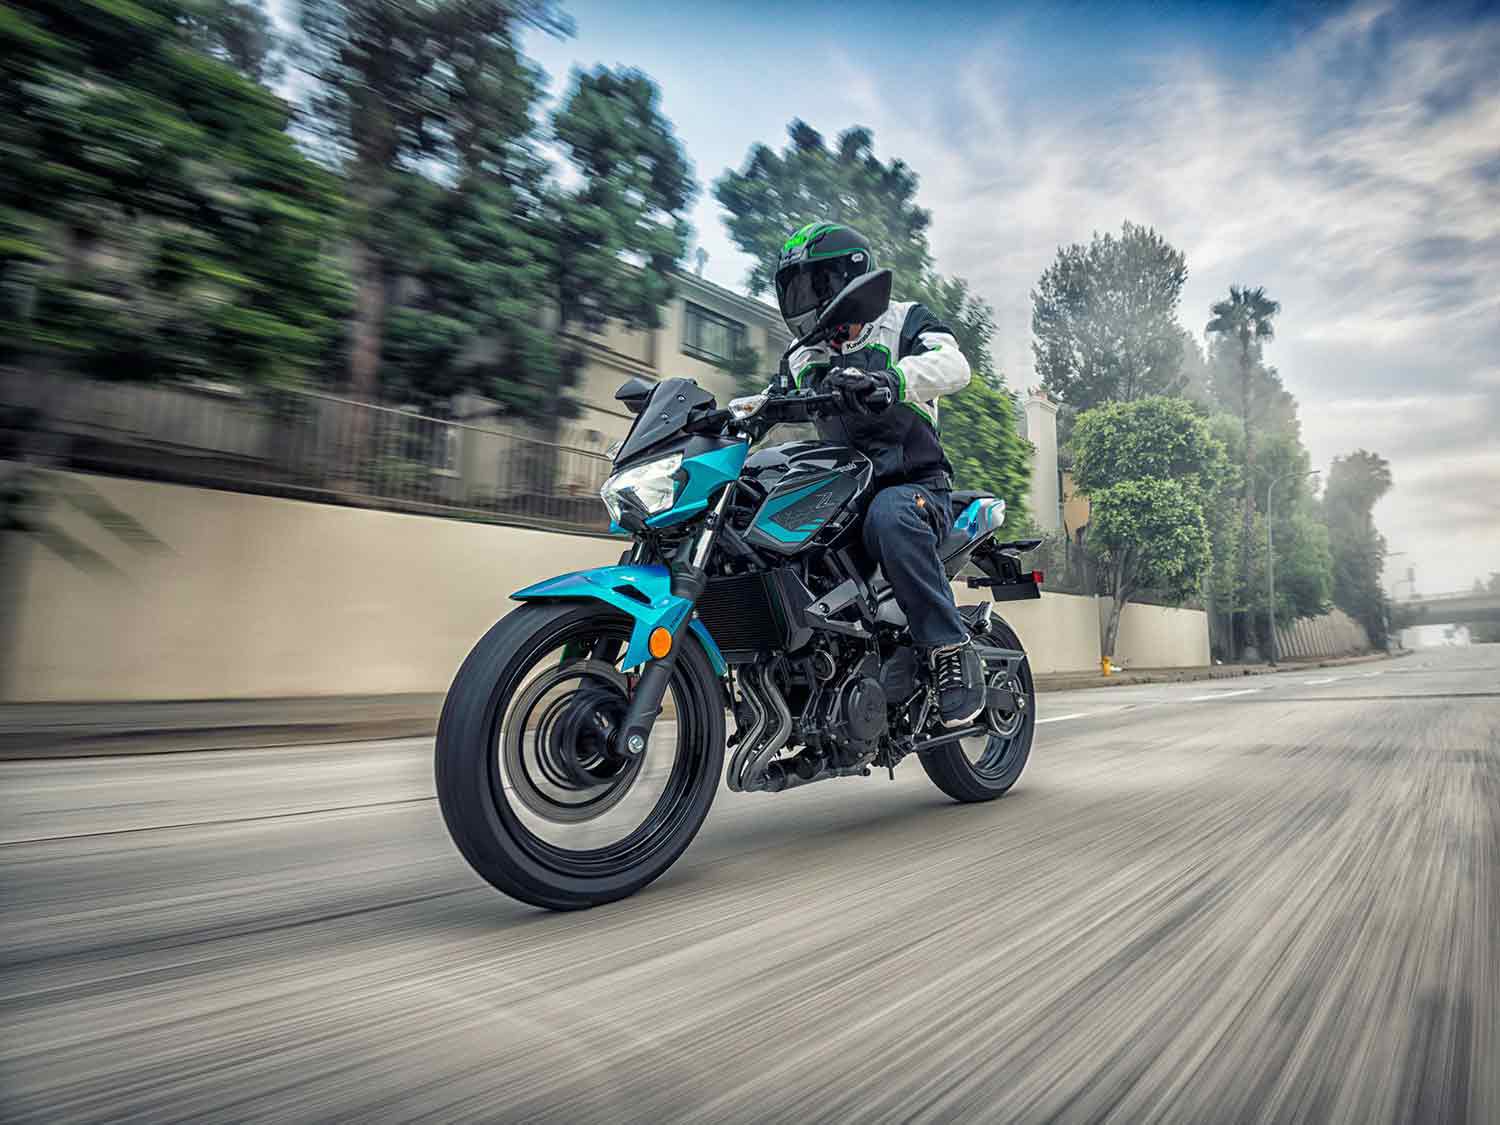 2021 Kawasaki ABS Look Preview | Motorcyclist